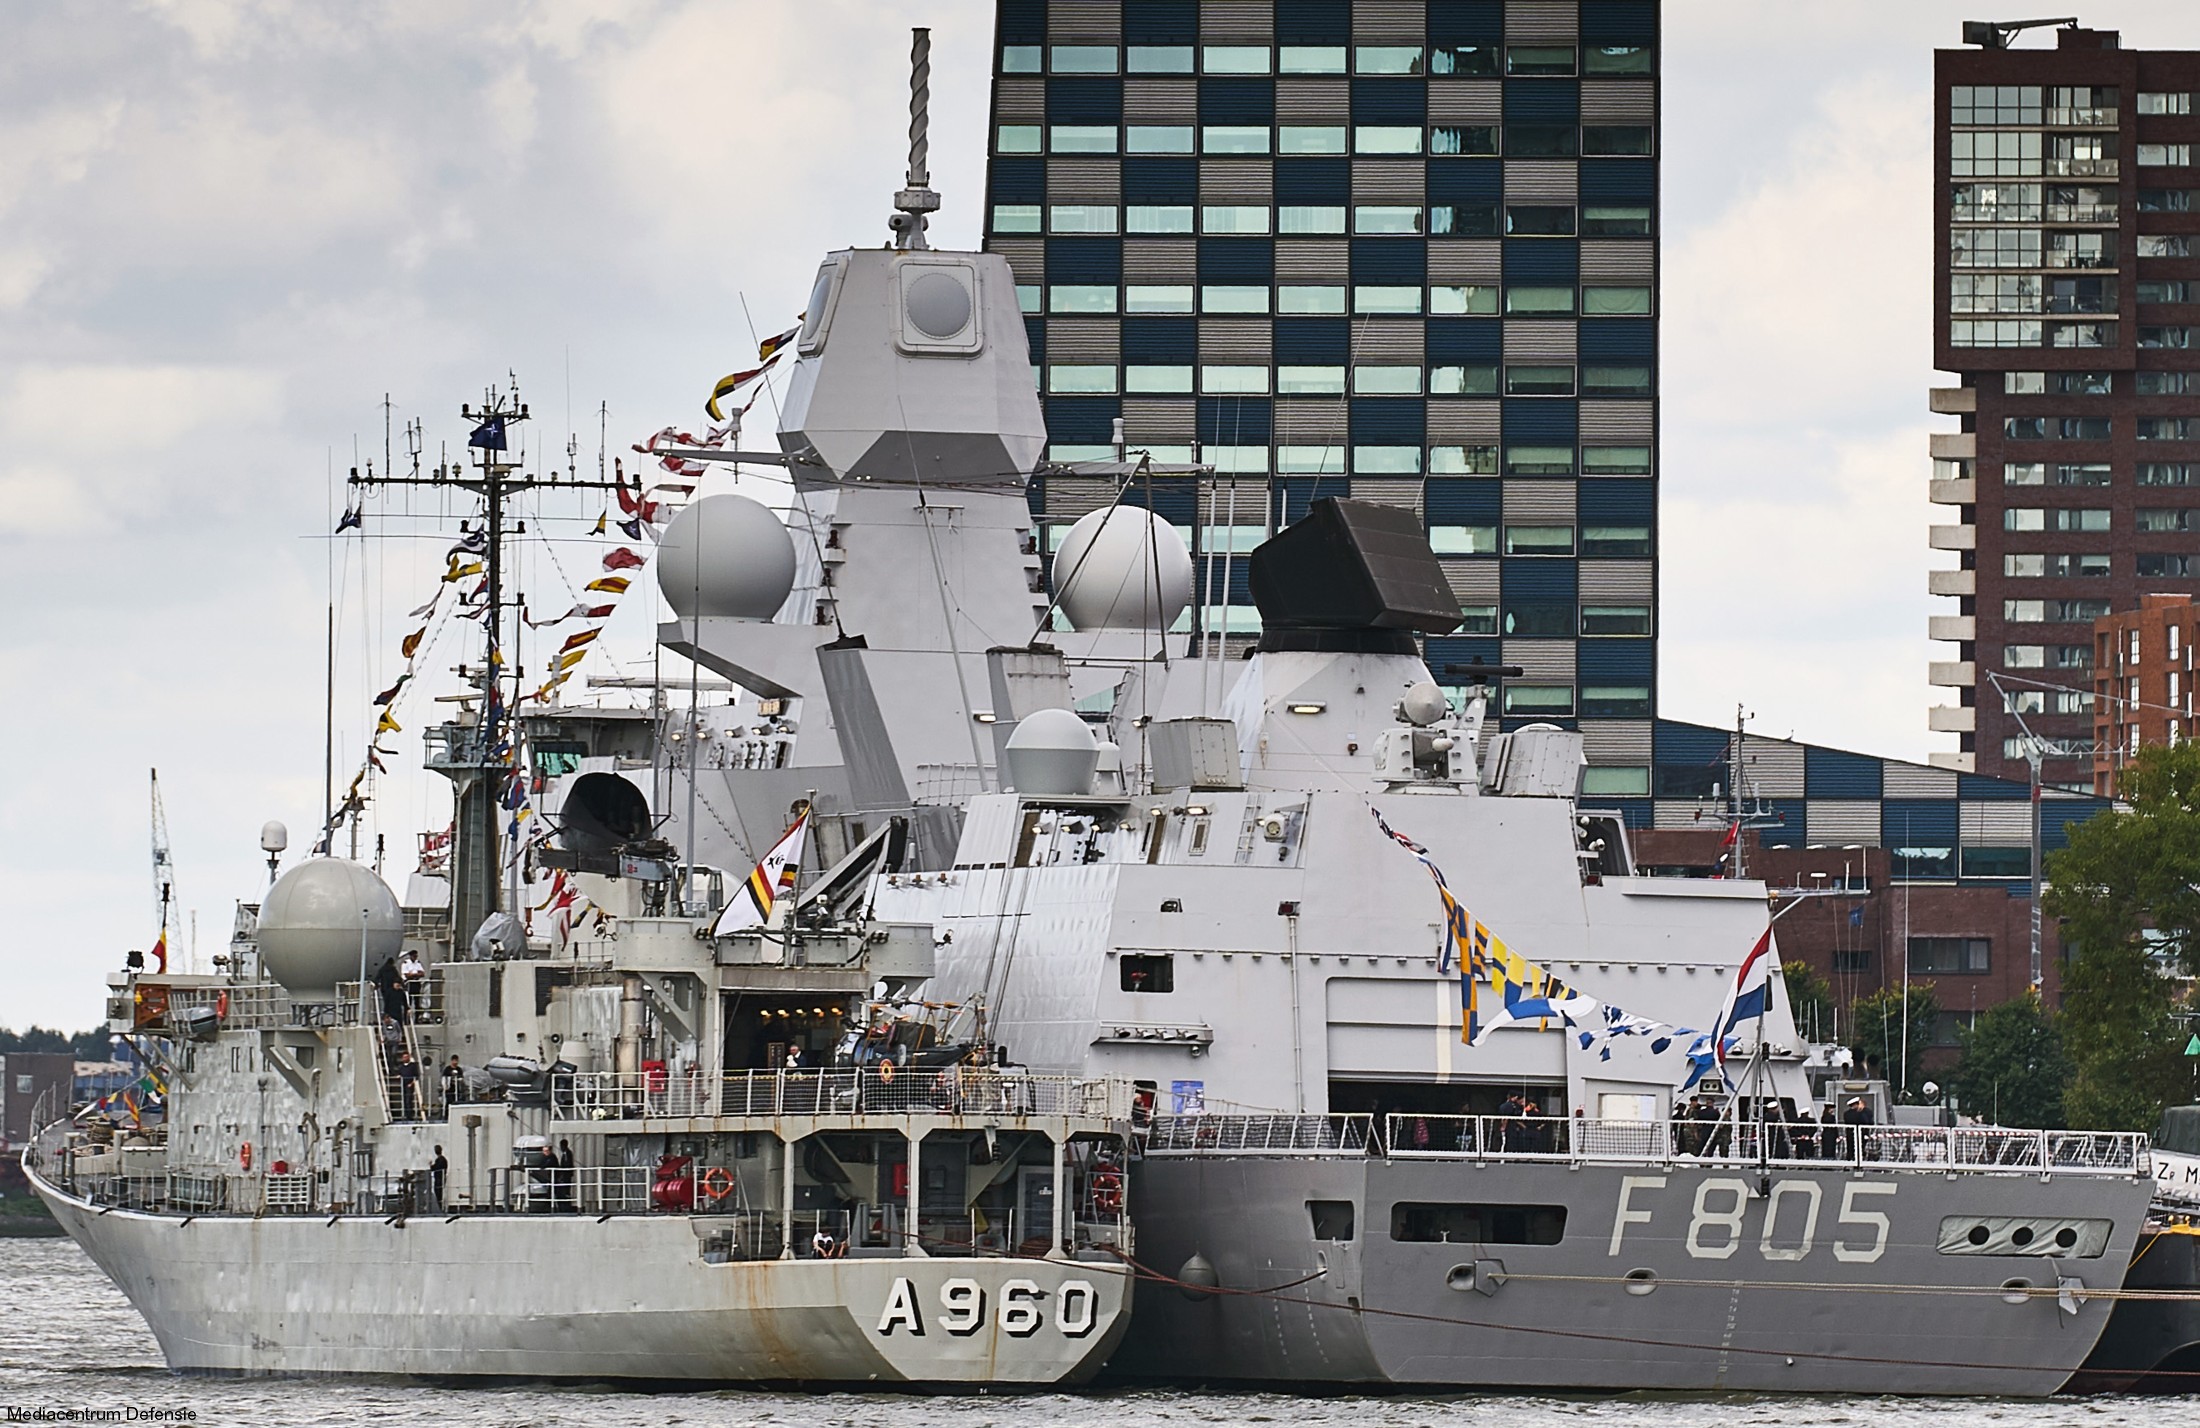 f-805 hnlms evertsen guided missile frigate ffg lcf royal netherlands navy 08